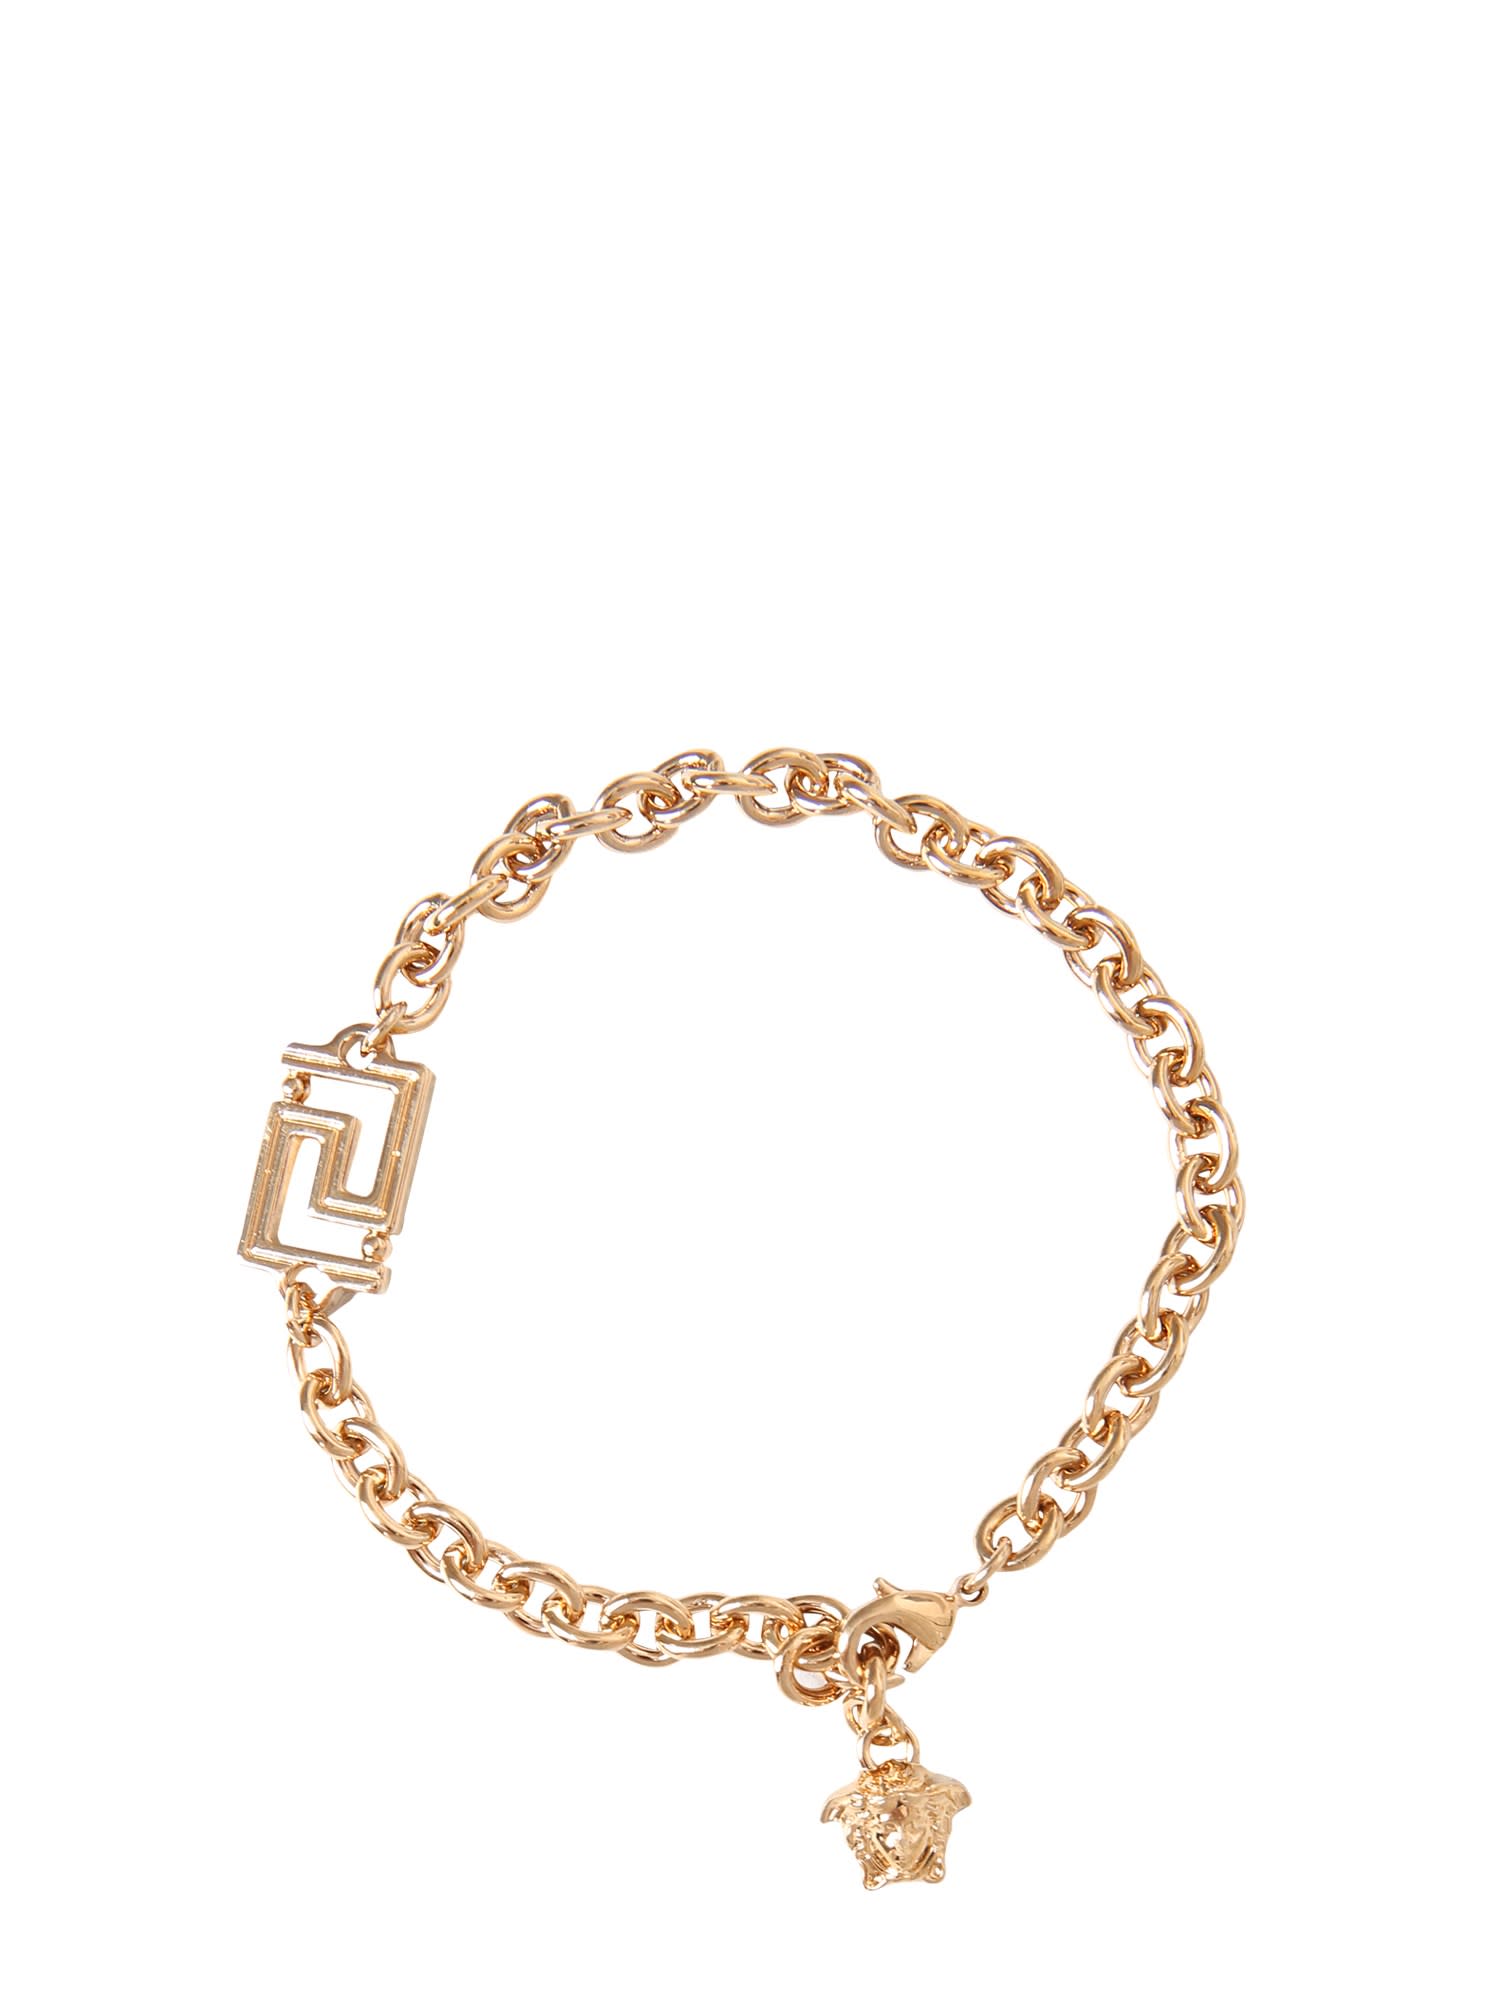 Versace Bracelet With Greek